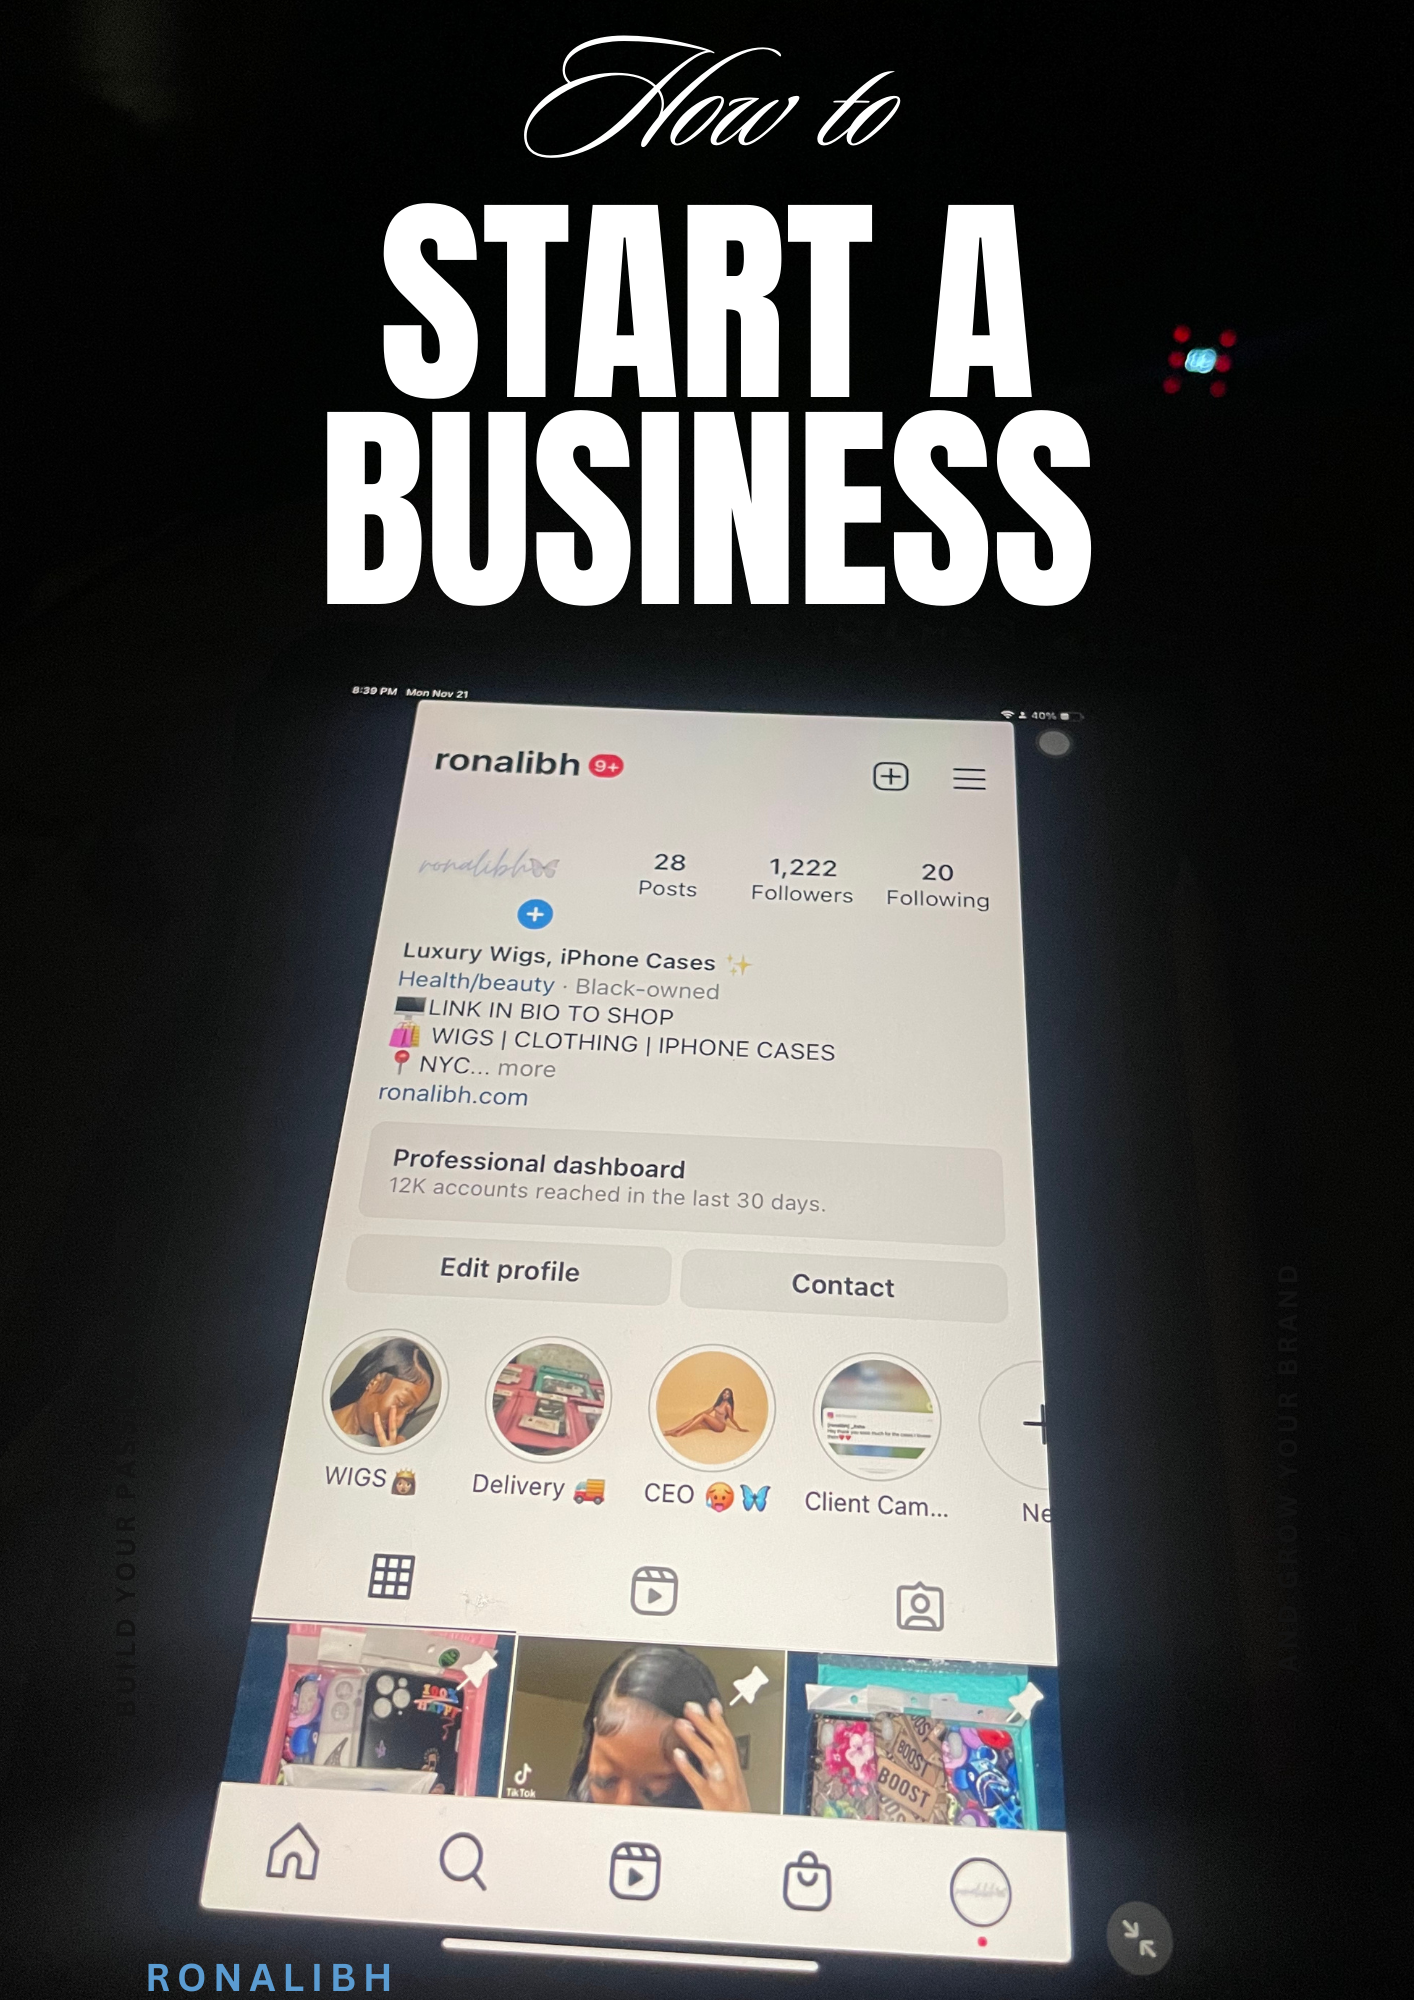 "Start A Business" Digital Product